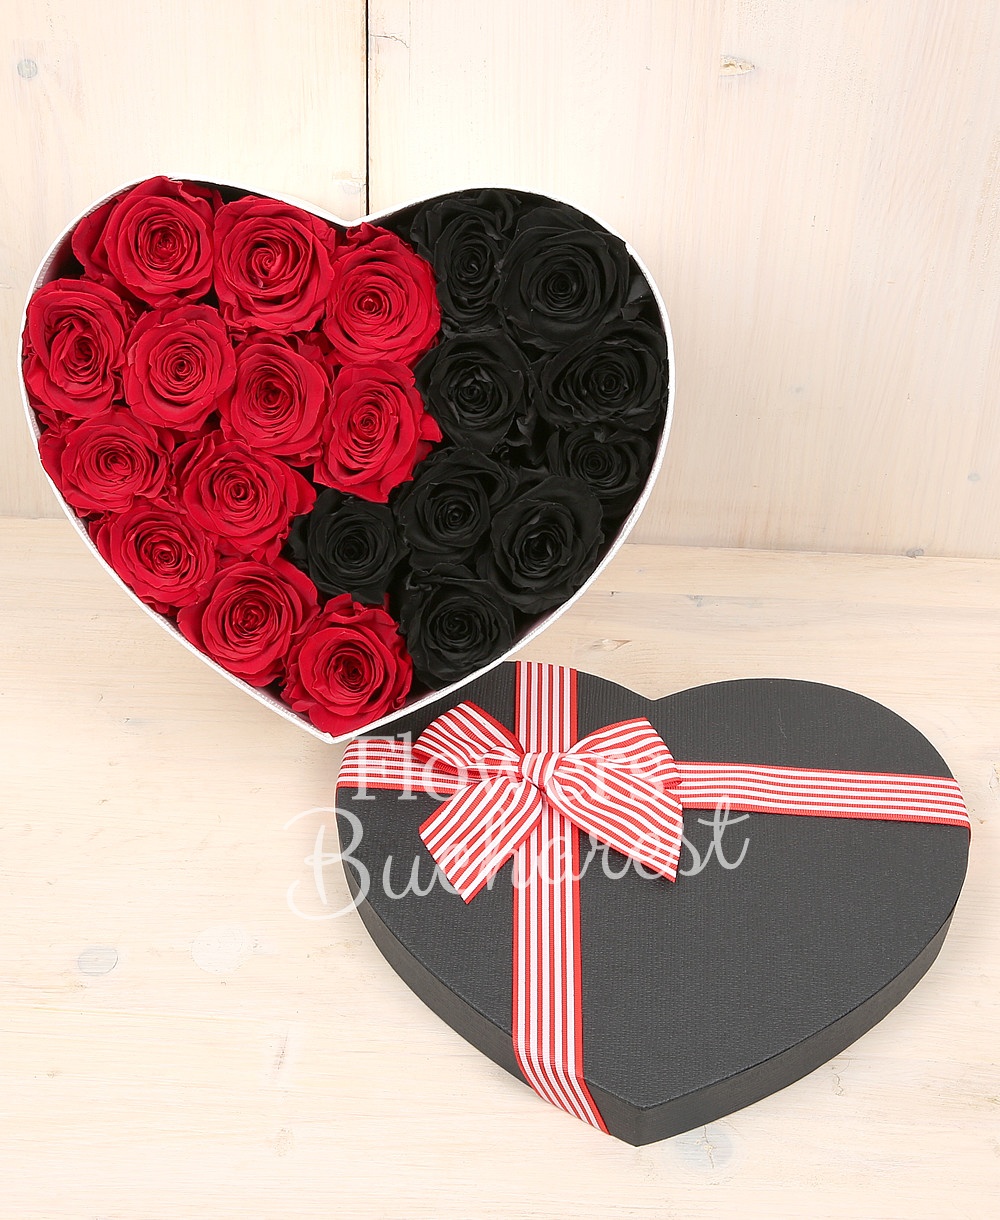 12 red cryogenic roses, 9 black cryogenic roses, heart shaped box